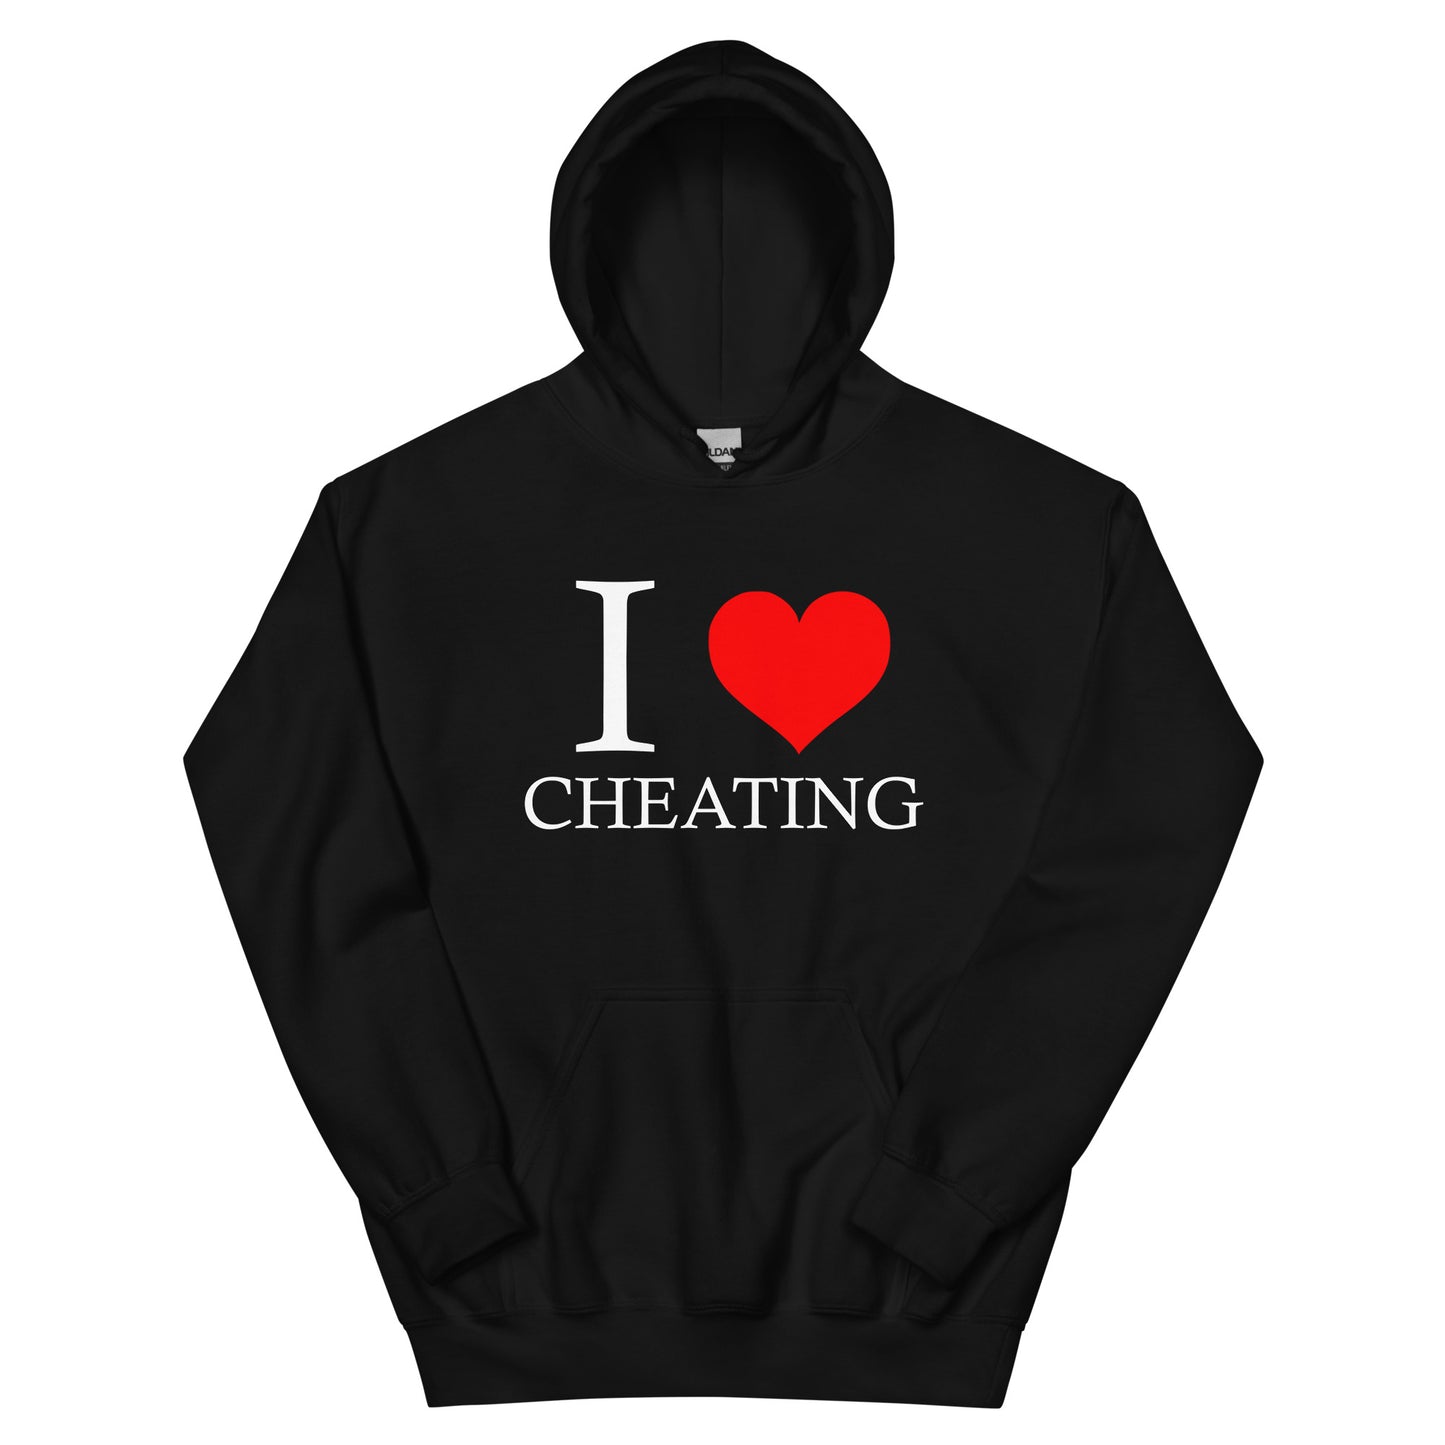 "I Love Cheating" Hoodie